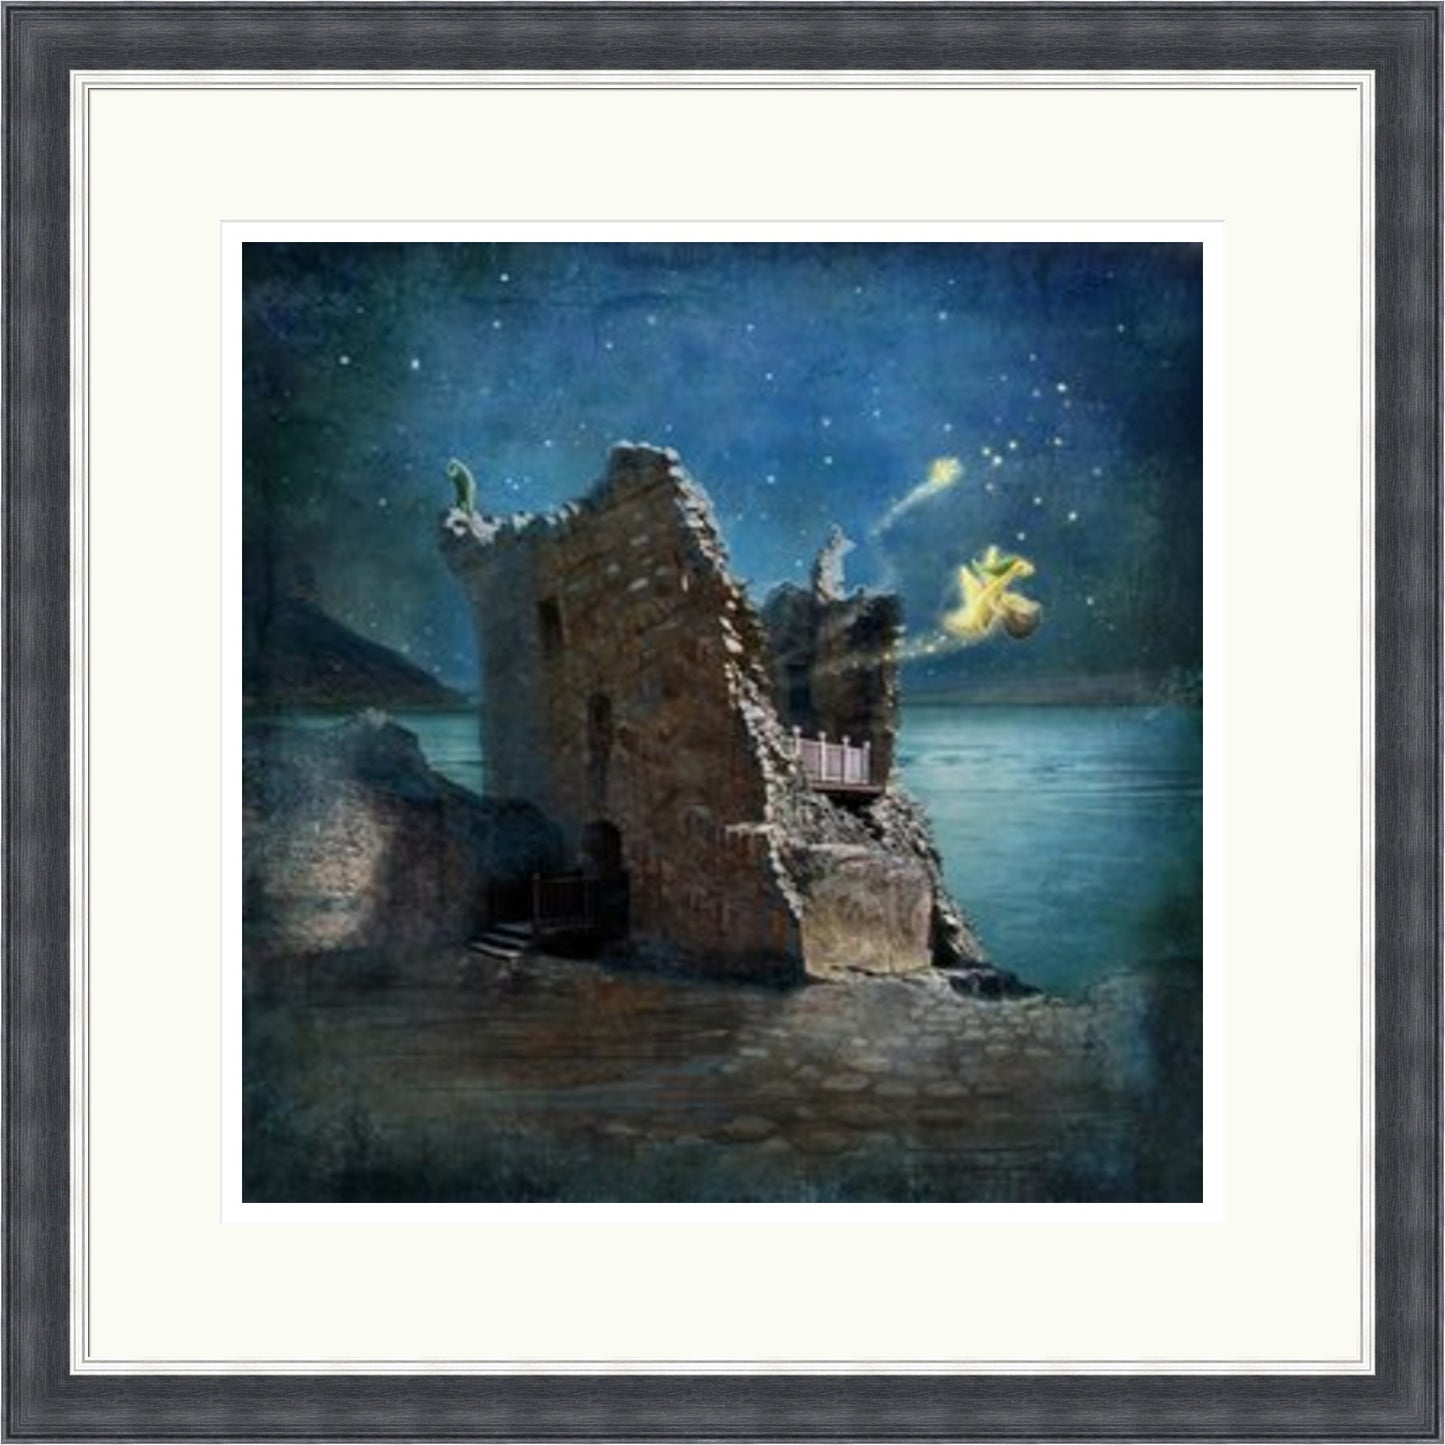 Urquhart Castle's Nightime Secret by Matylda Konecka